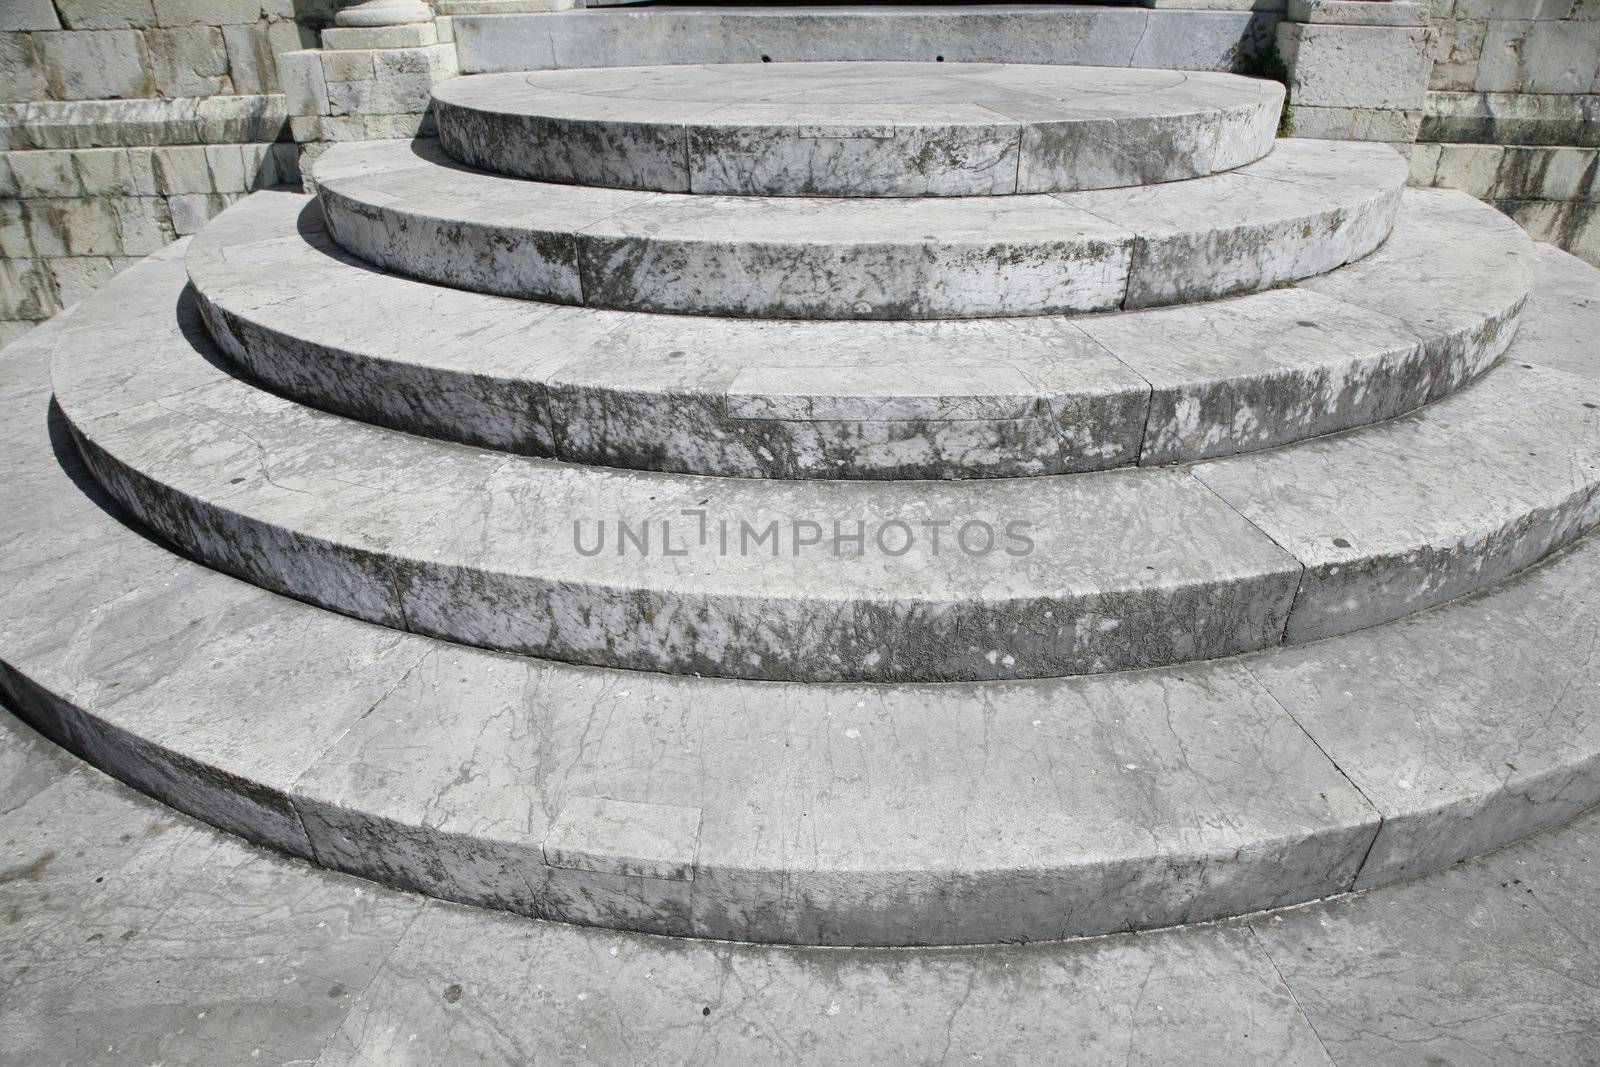 Cirkular white Carrara marble steps - entrance to Italian church.